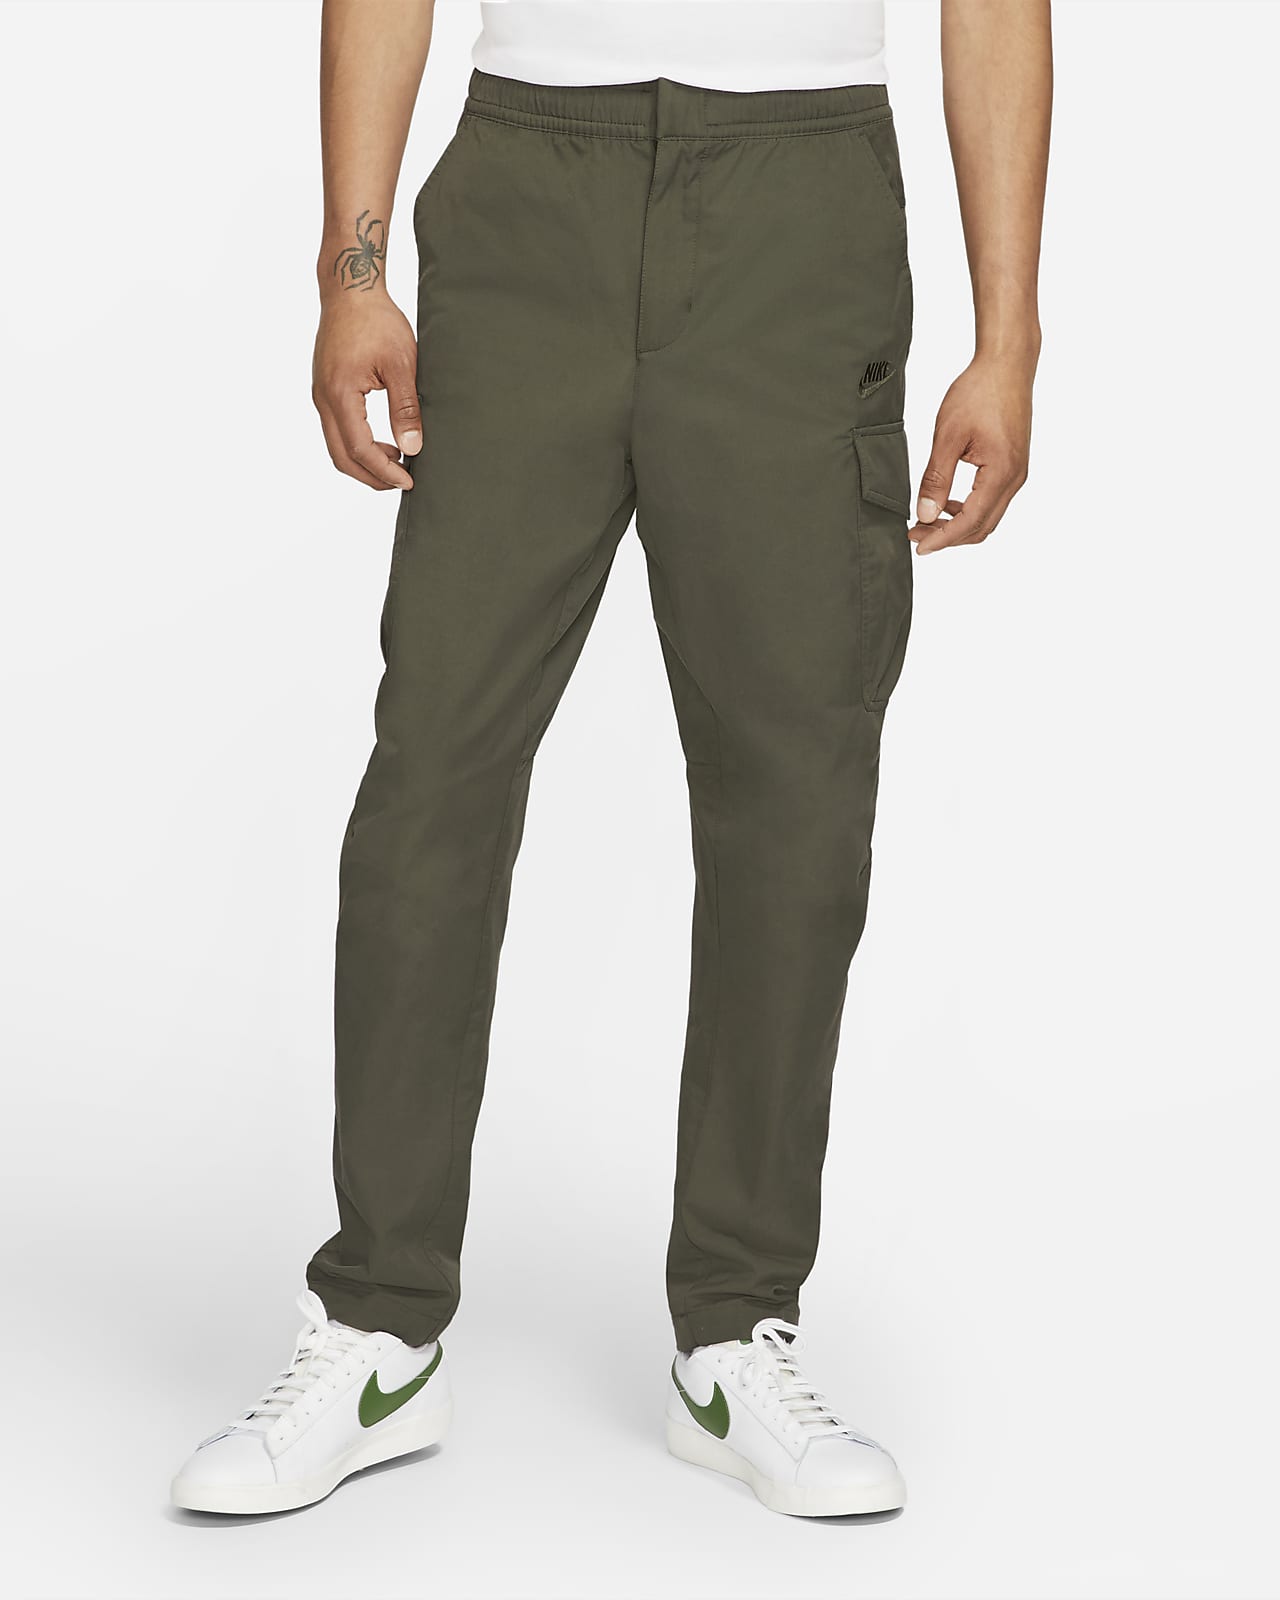 Mens Fleece Pants & Tights. Nike.com